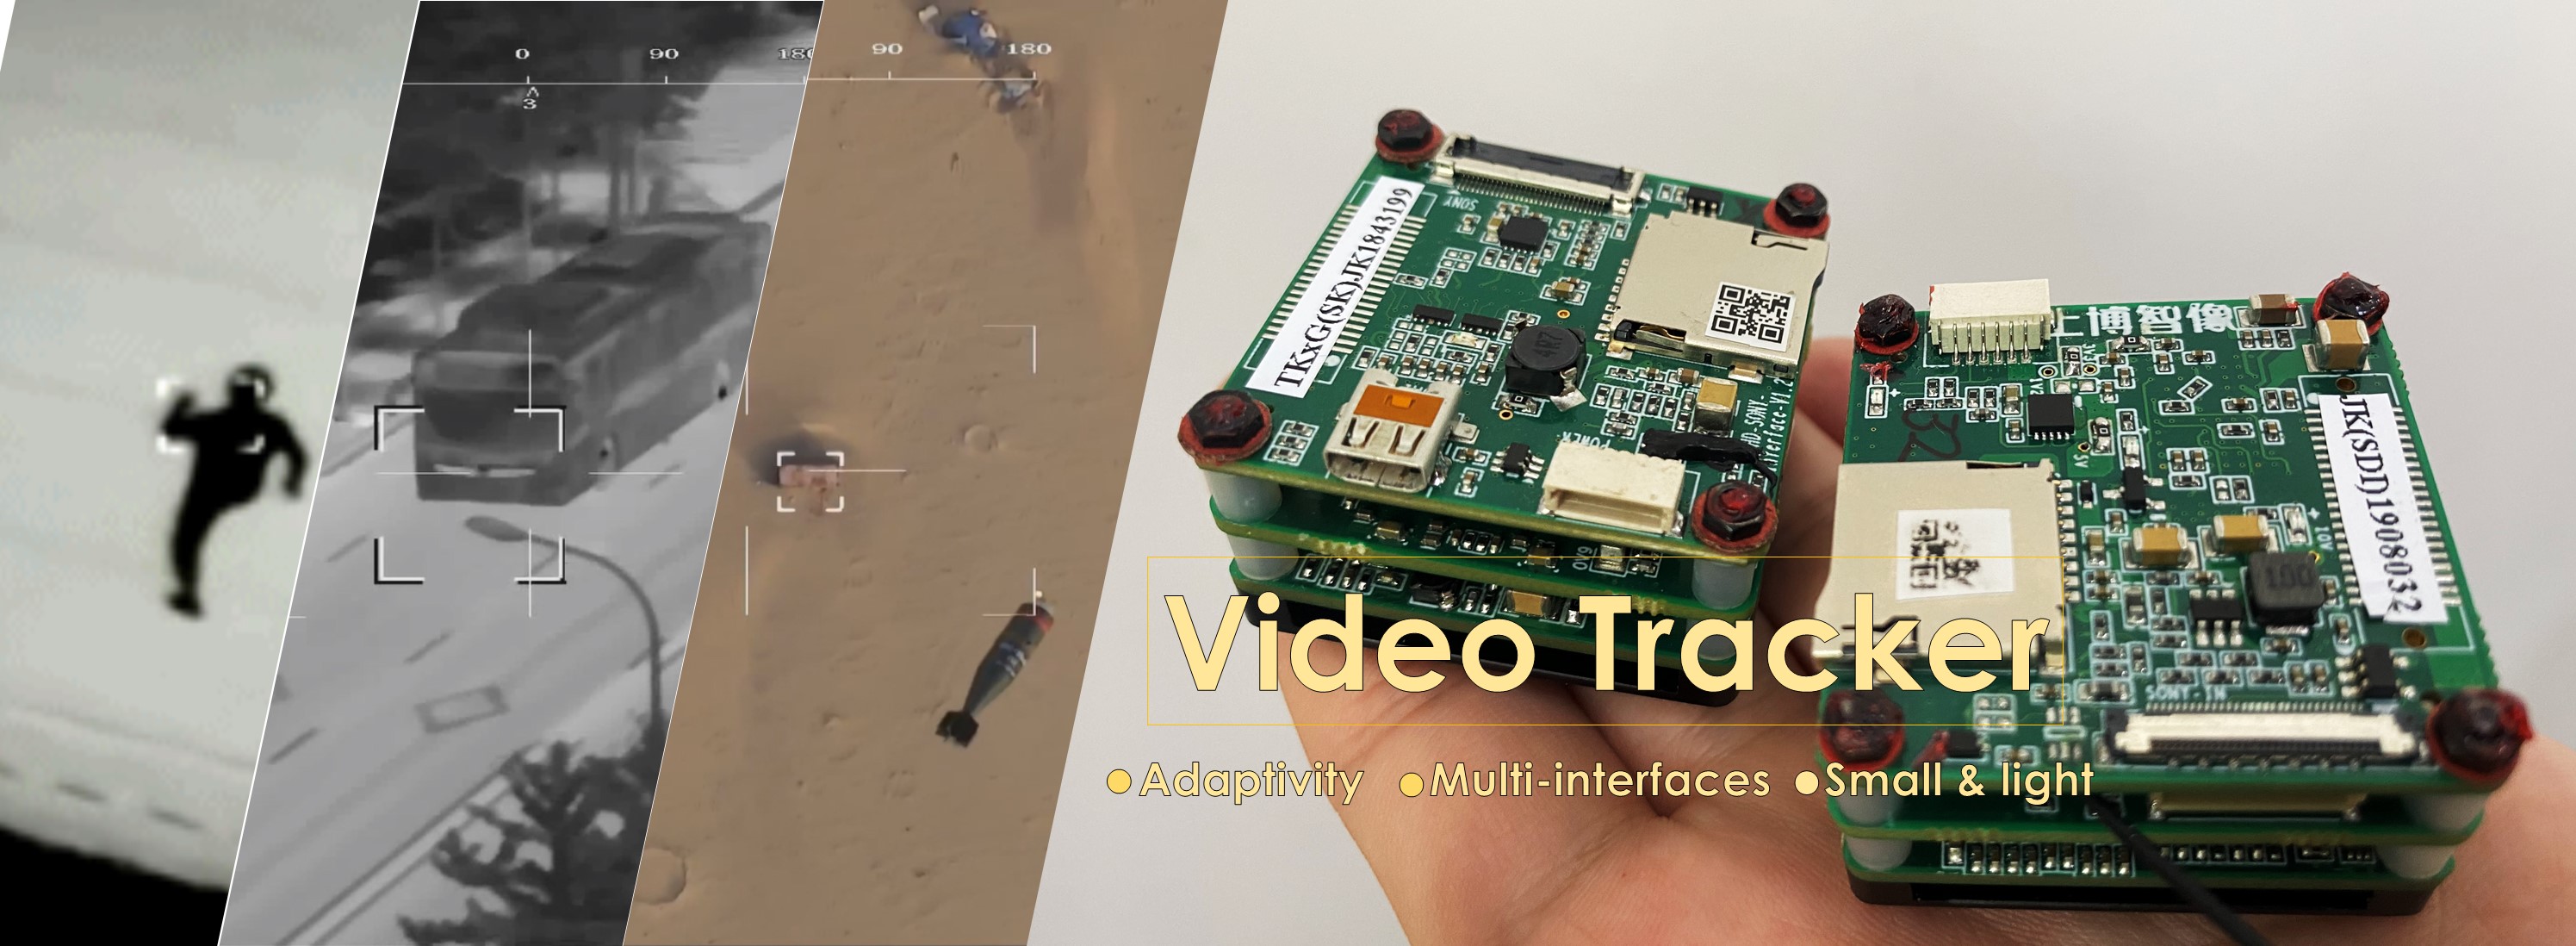 Video tracker